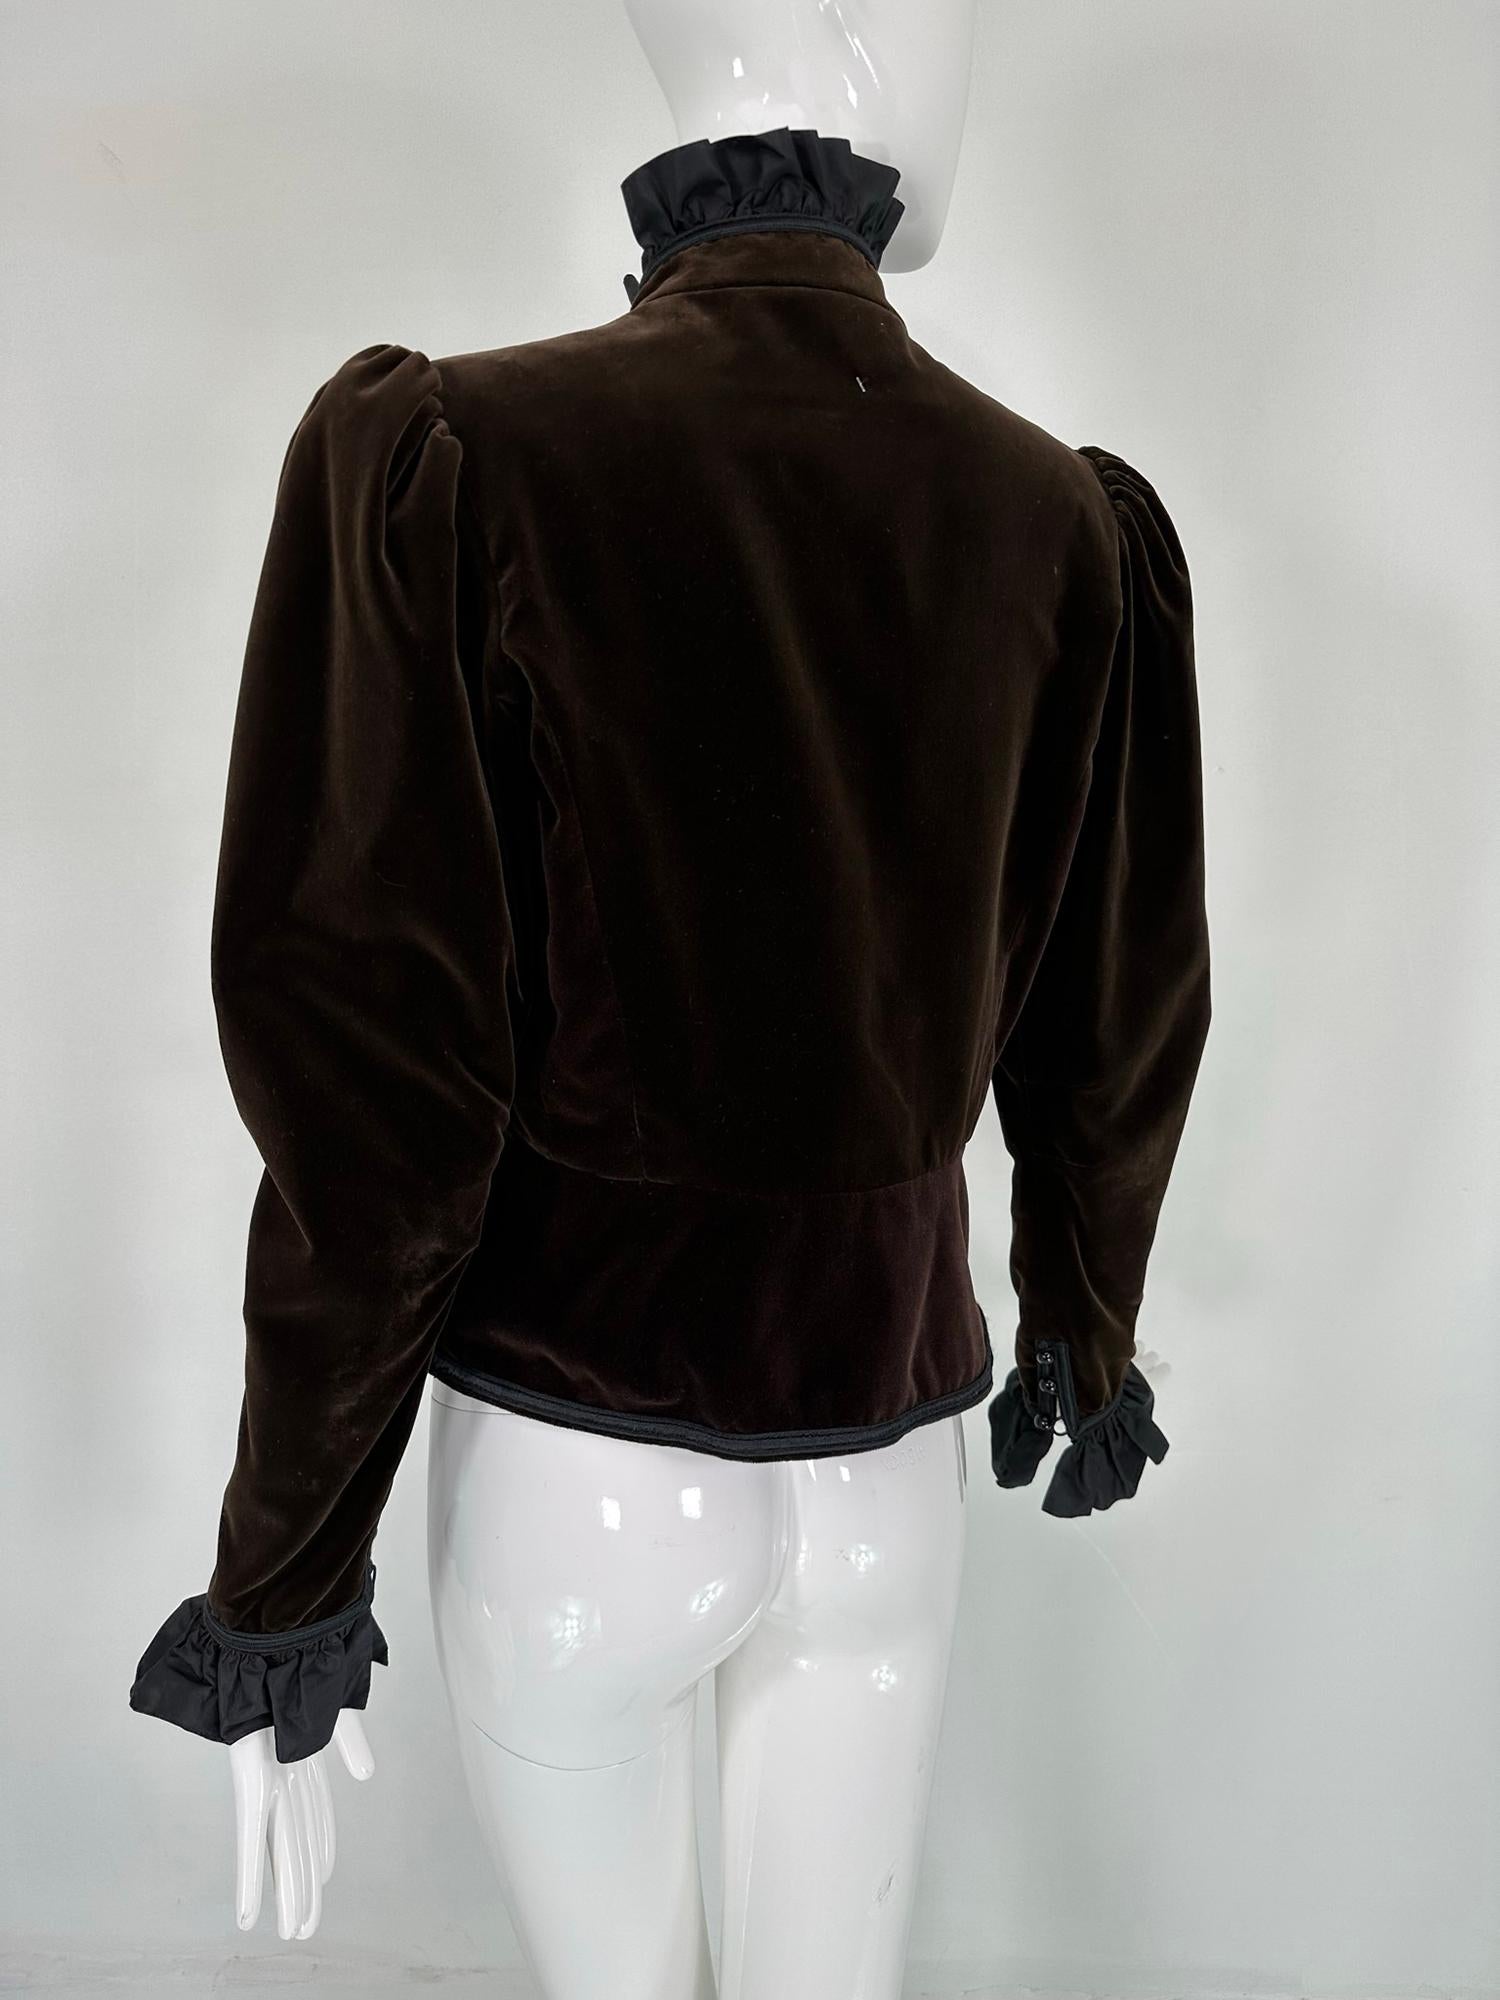 Yves Saint Laurent Rive Gauche Chocolate Velvet Victorian Style Jacket 1971-72 For Sale 4